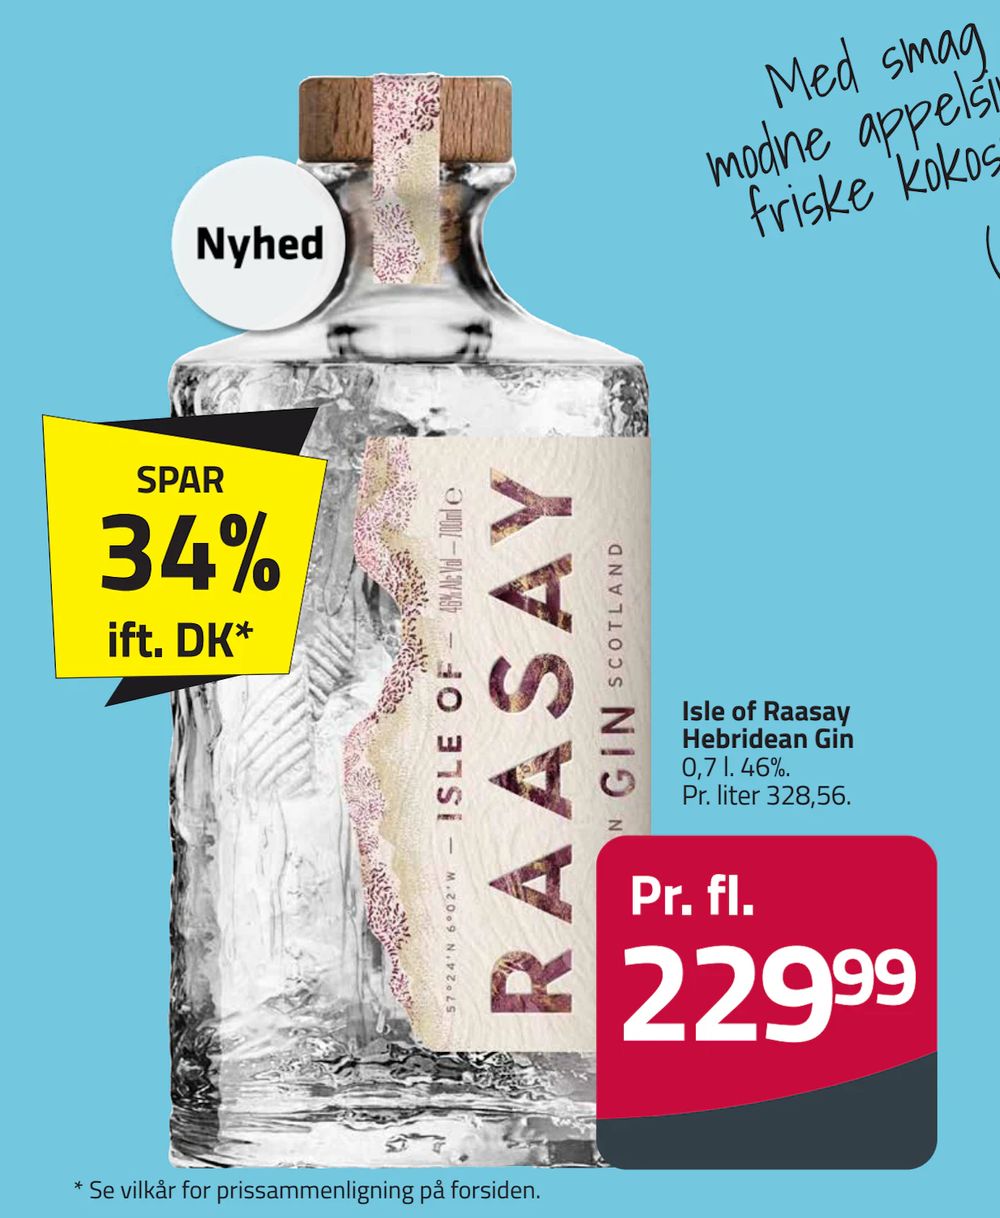 Tilbud på Isle of Raasay Hebridean Gin fra Fleggaard til 229,99 kr.